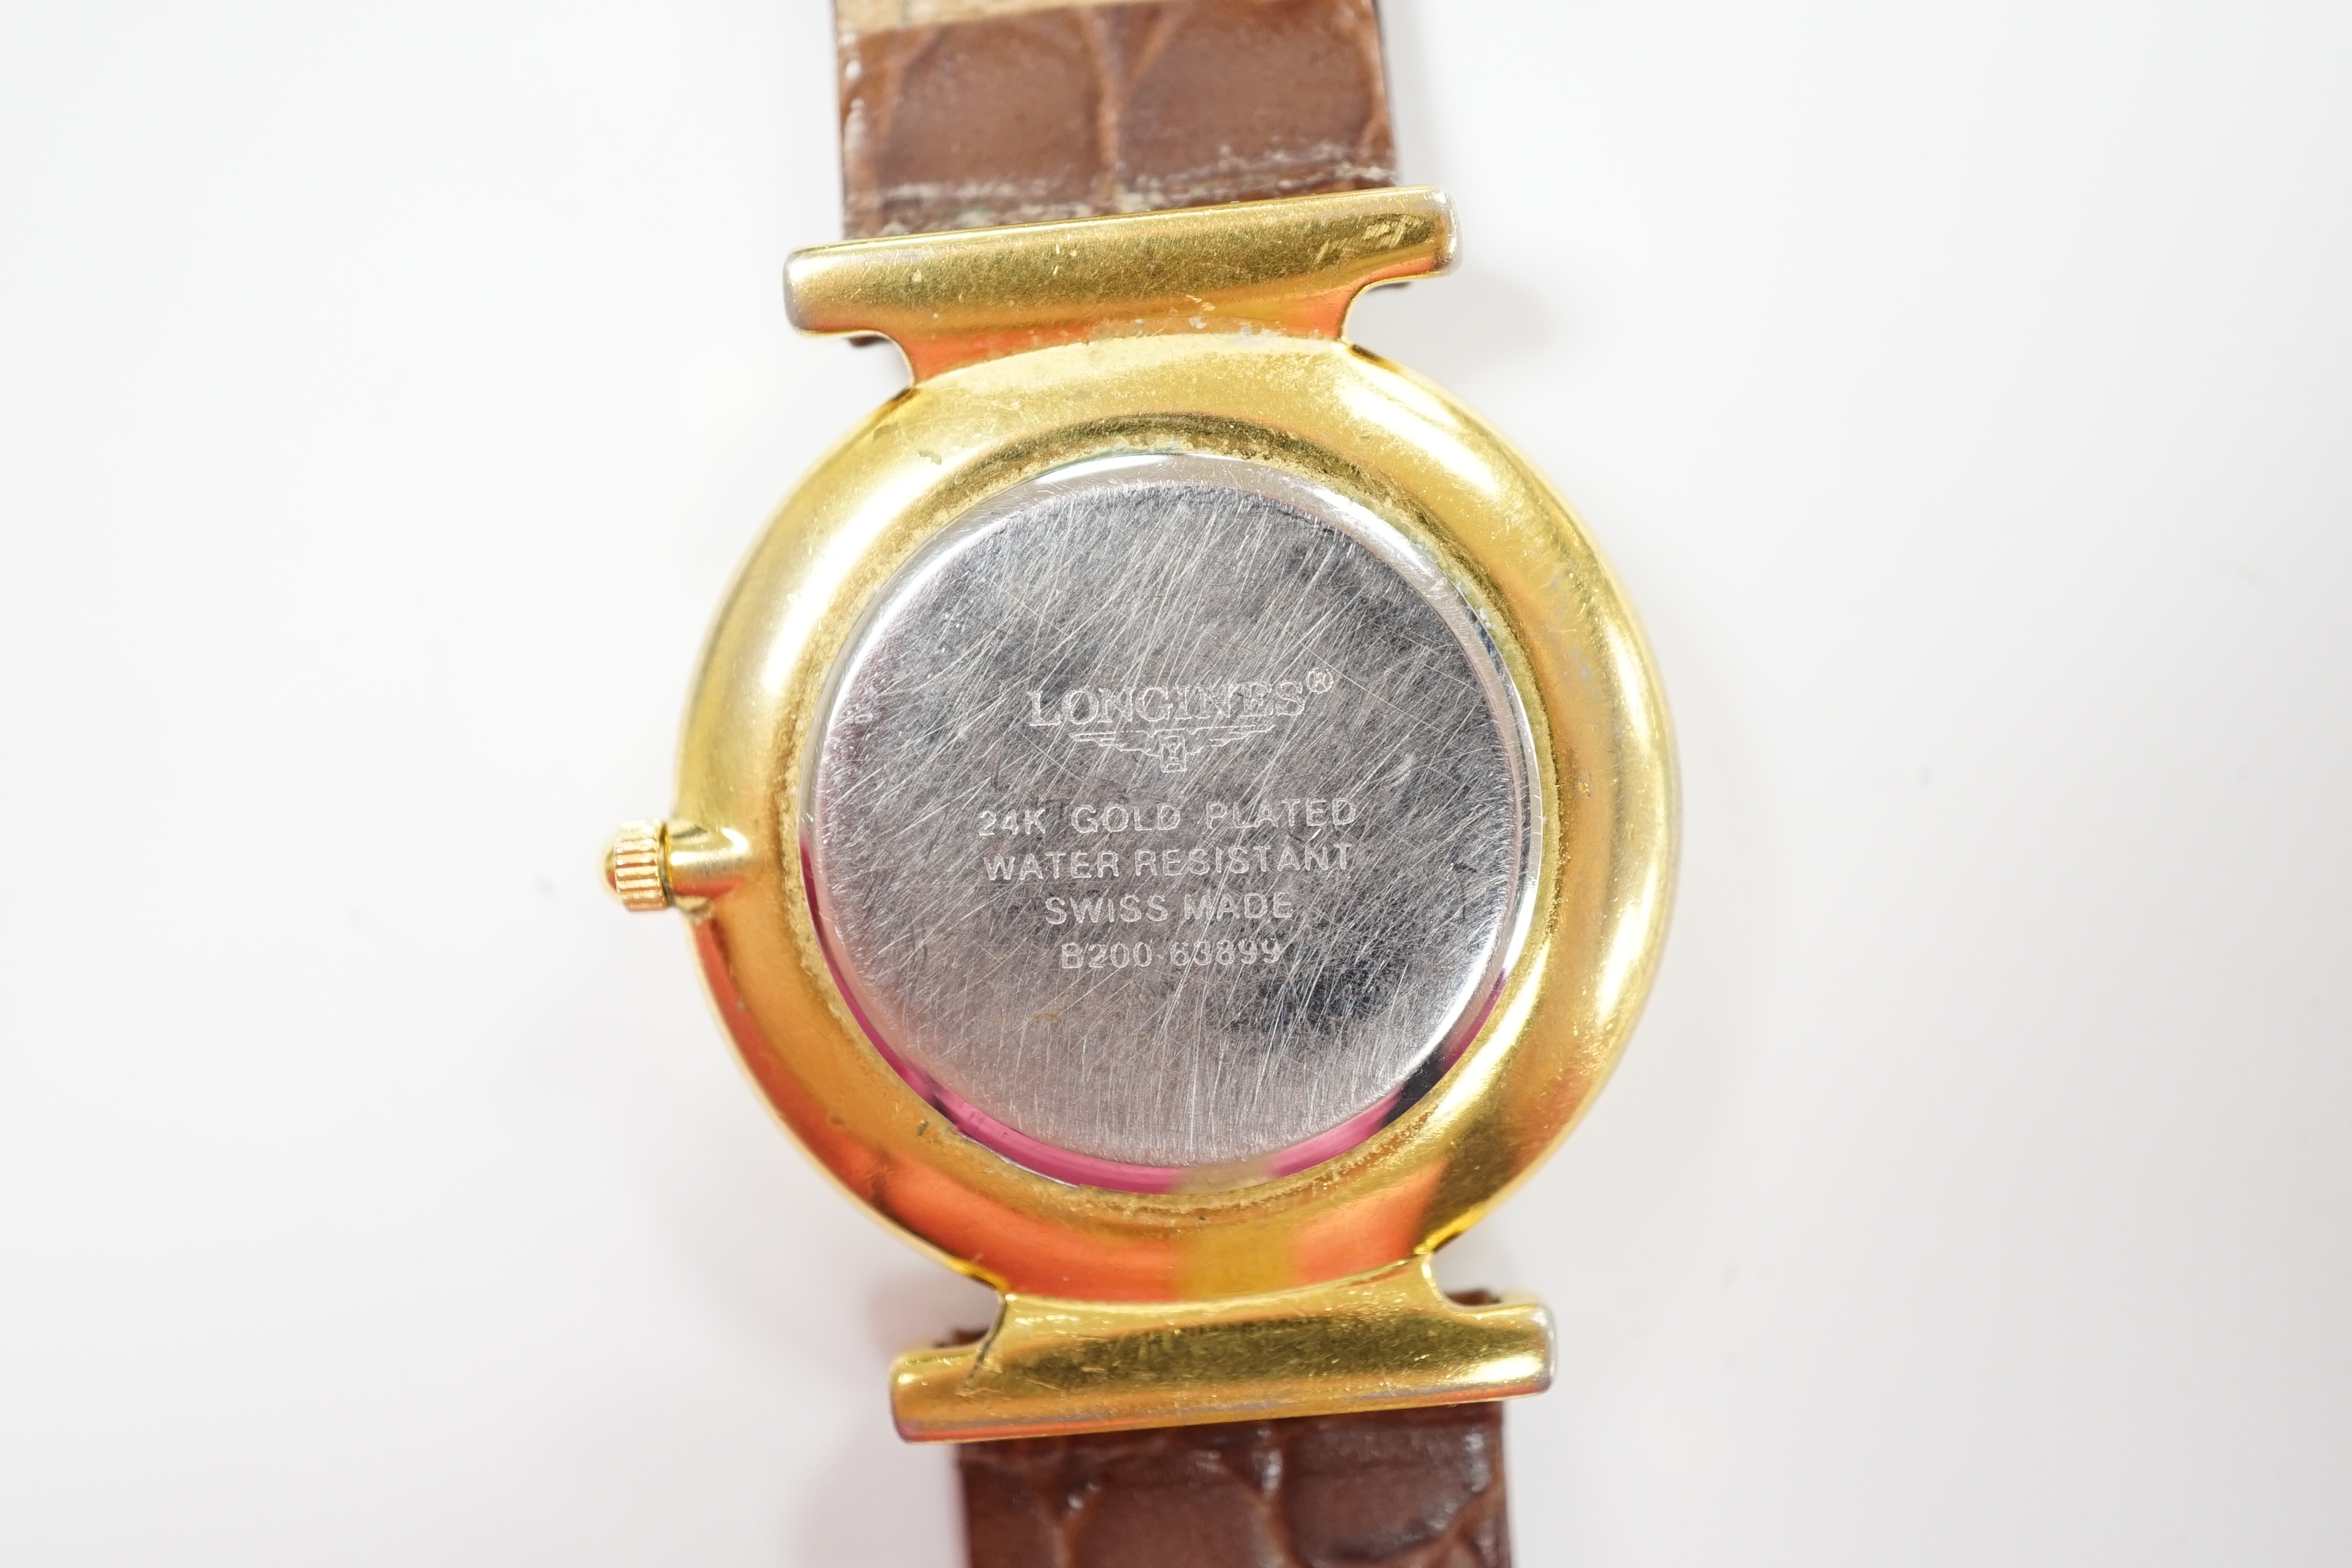 A gentleman's 24kt gold plated Longines quartz dress wrist watch, on associated leather strap.